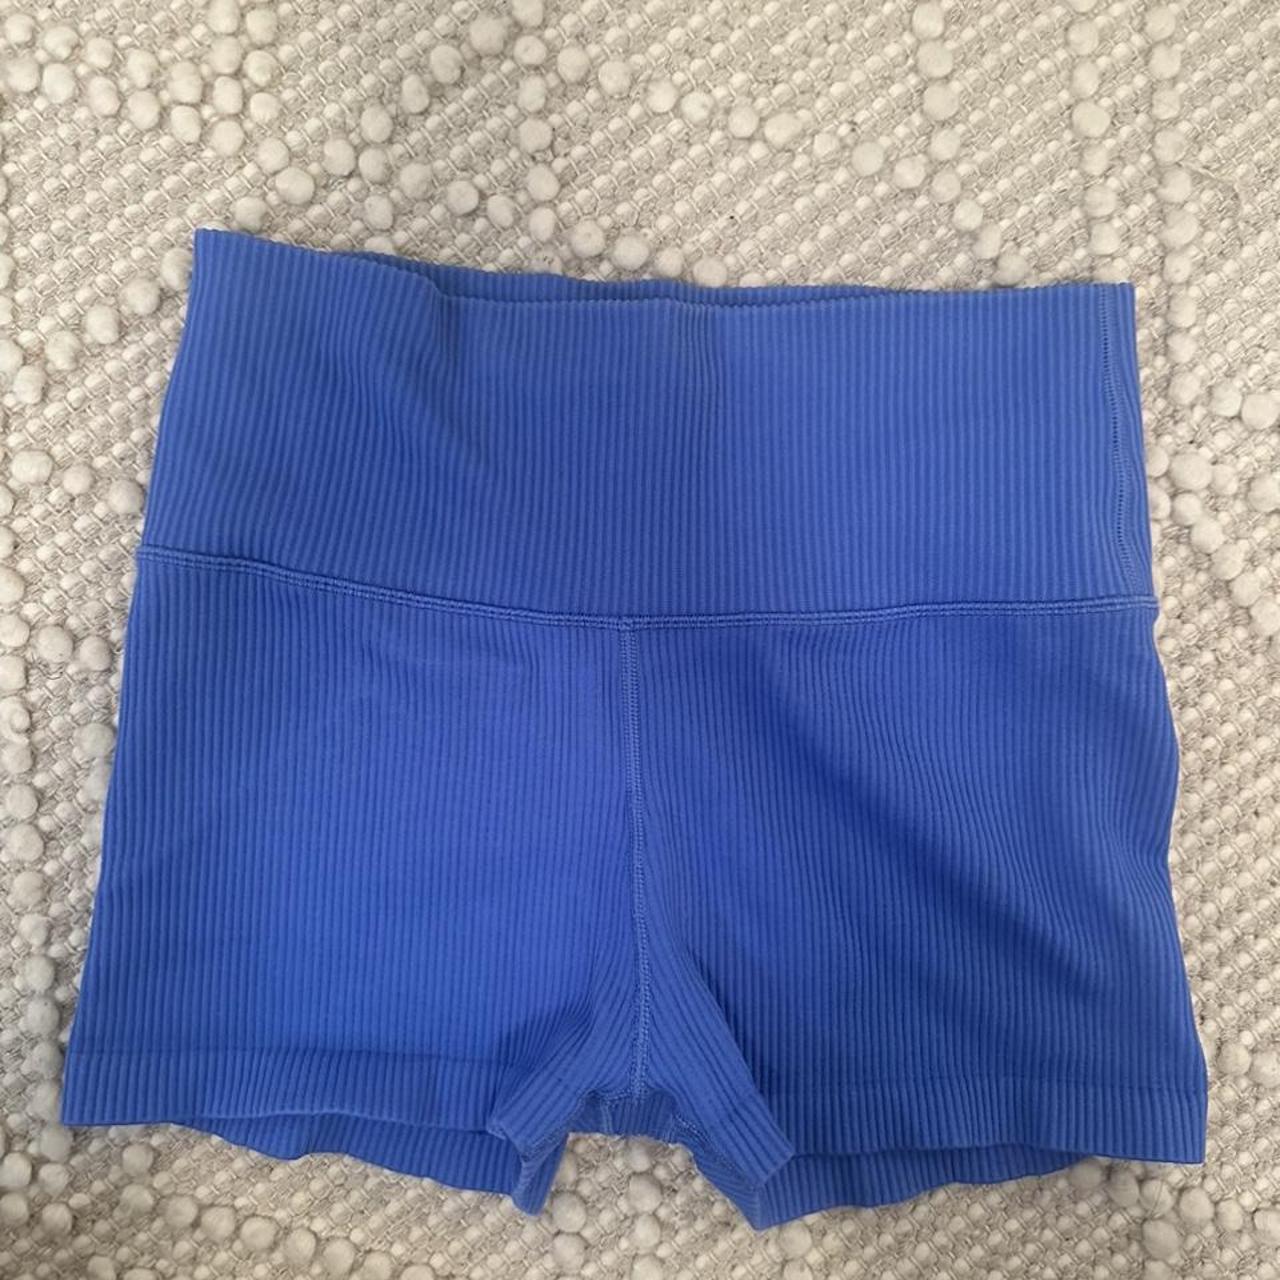 Aerie Women's Blue Shorts | Depop